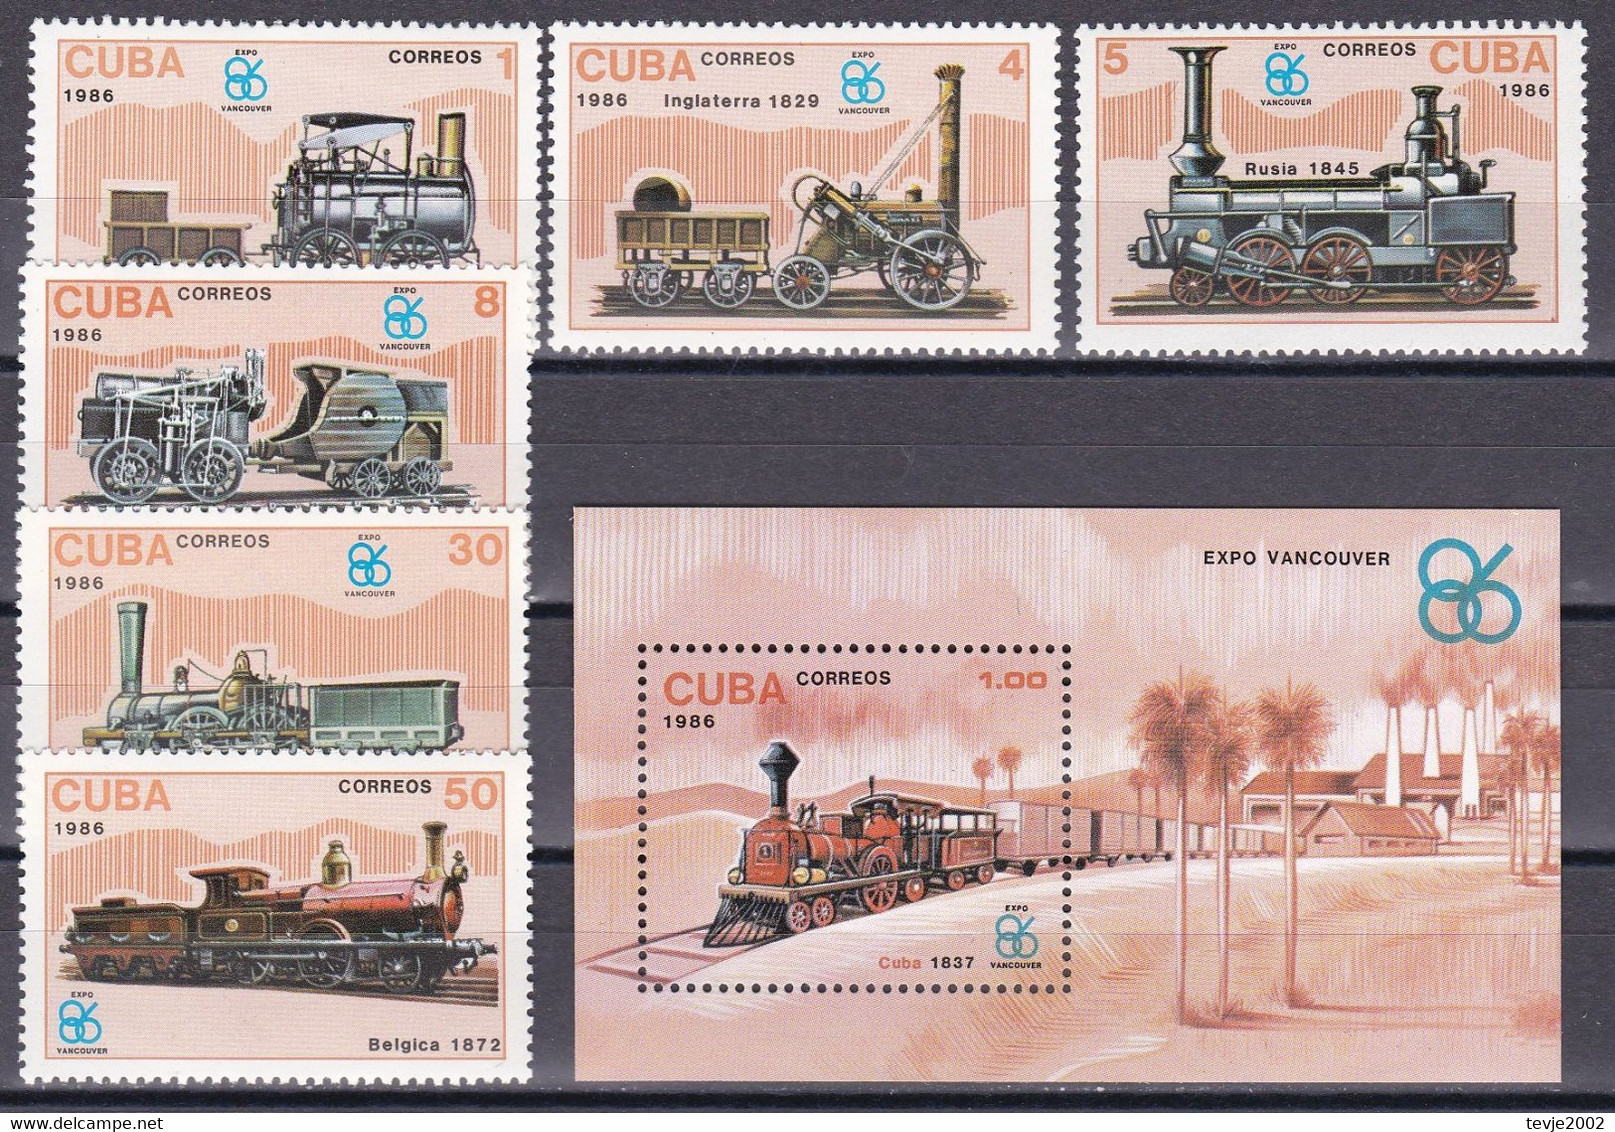 Kuba Cuba 1986 - Mi.Nr. 3017 - 3022 + Block 95 - Postfrisch MNH - Eisenbahnen Railways Lokomotiven Locomotives - Treinen